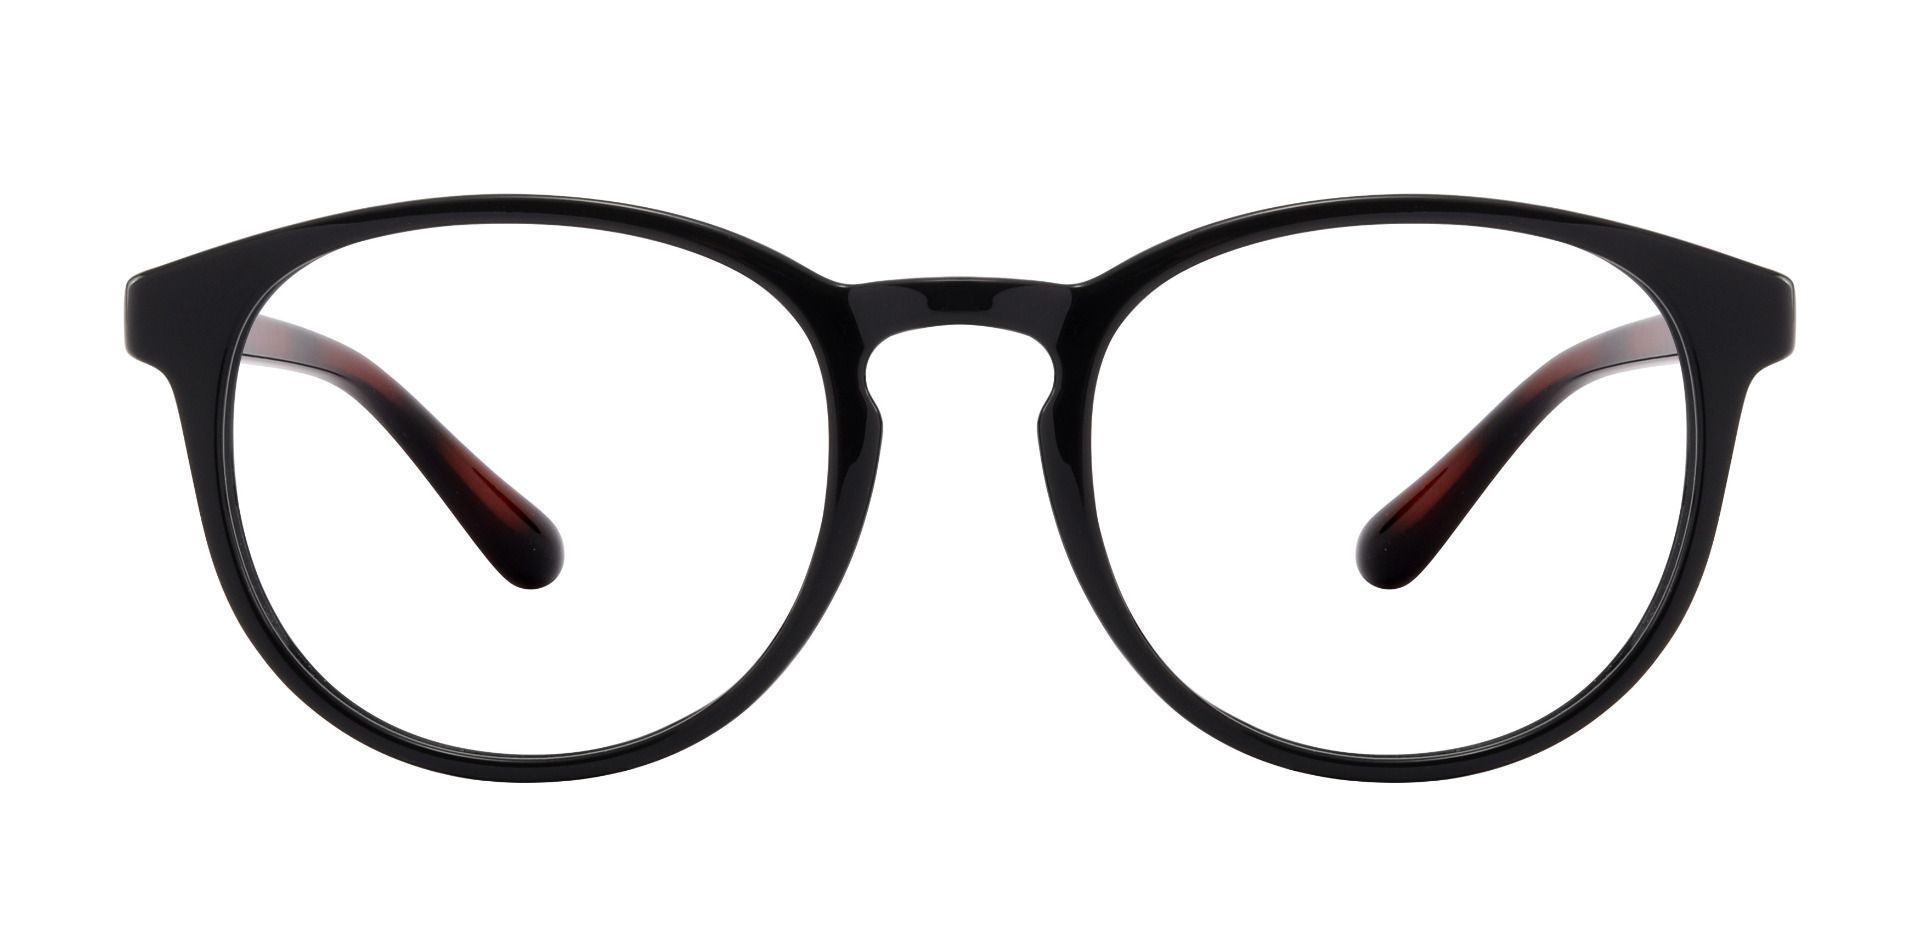 Clarita Oval Reading Glasses - Black